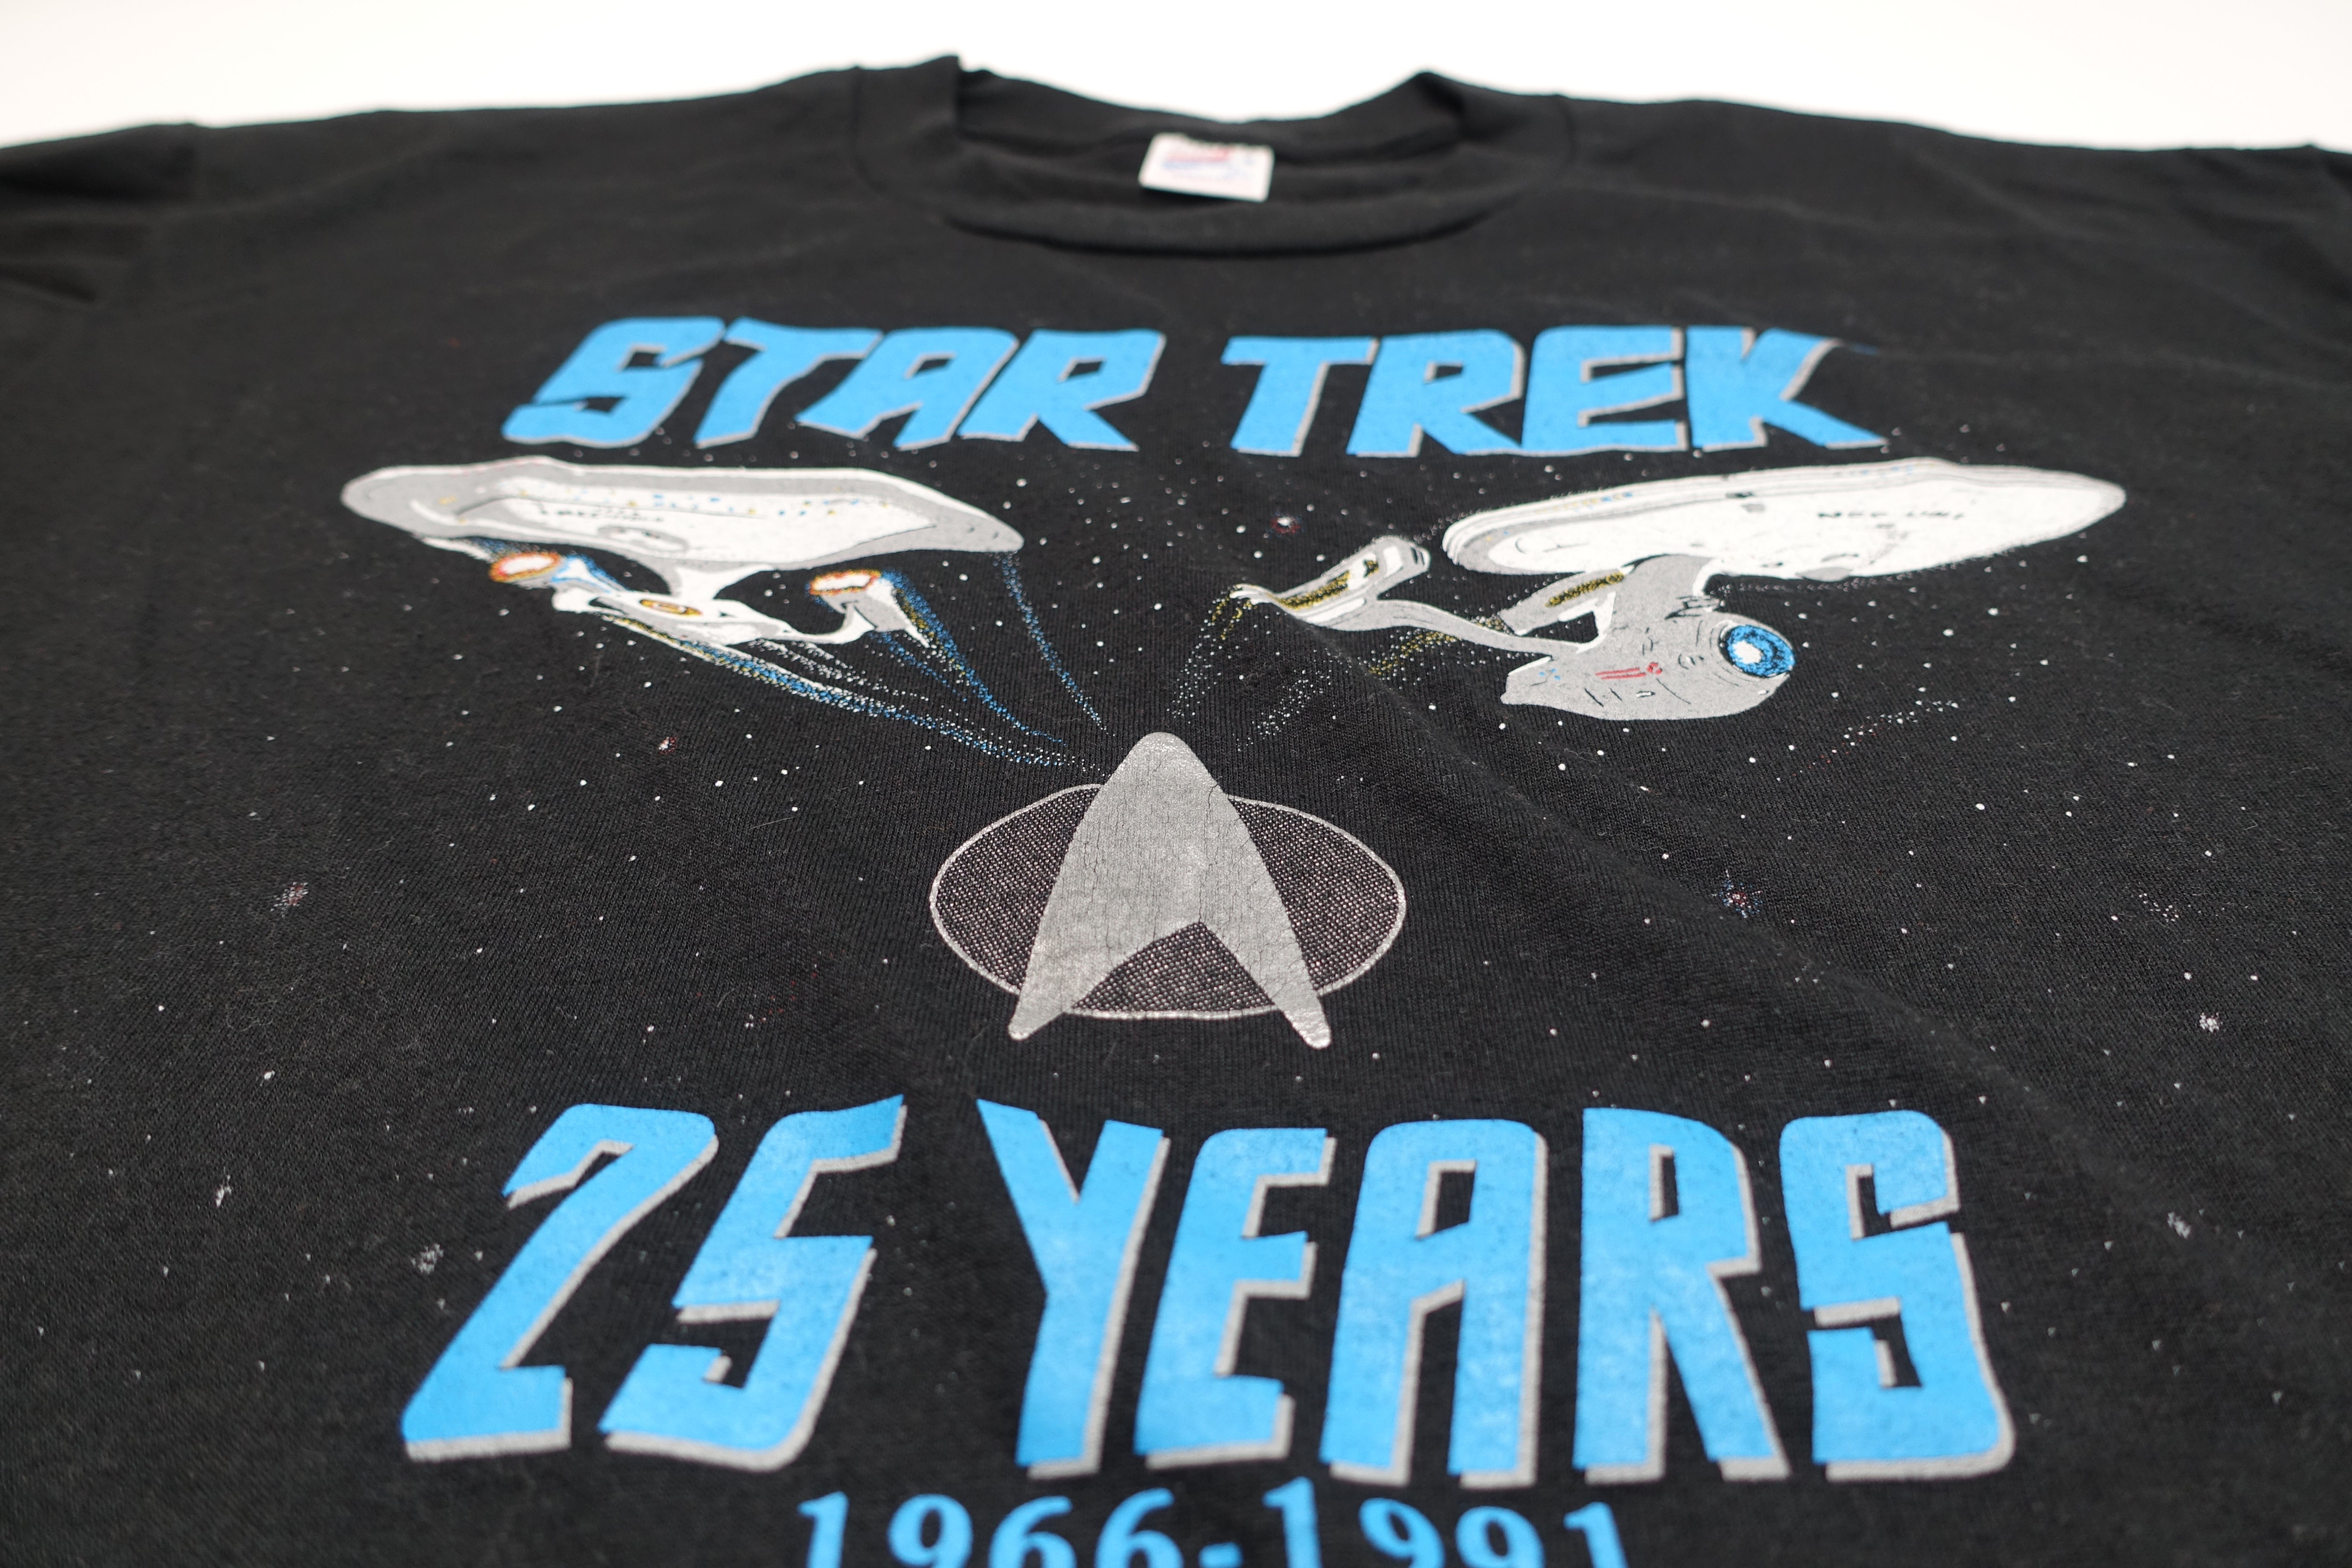 Star Trek - 25 Years  1966-1991 Shirt Size XL